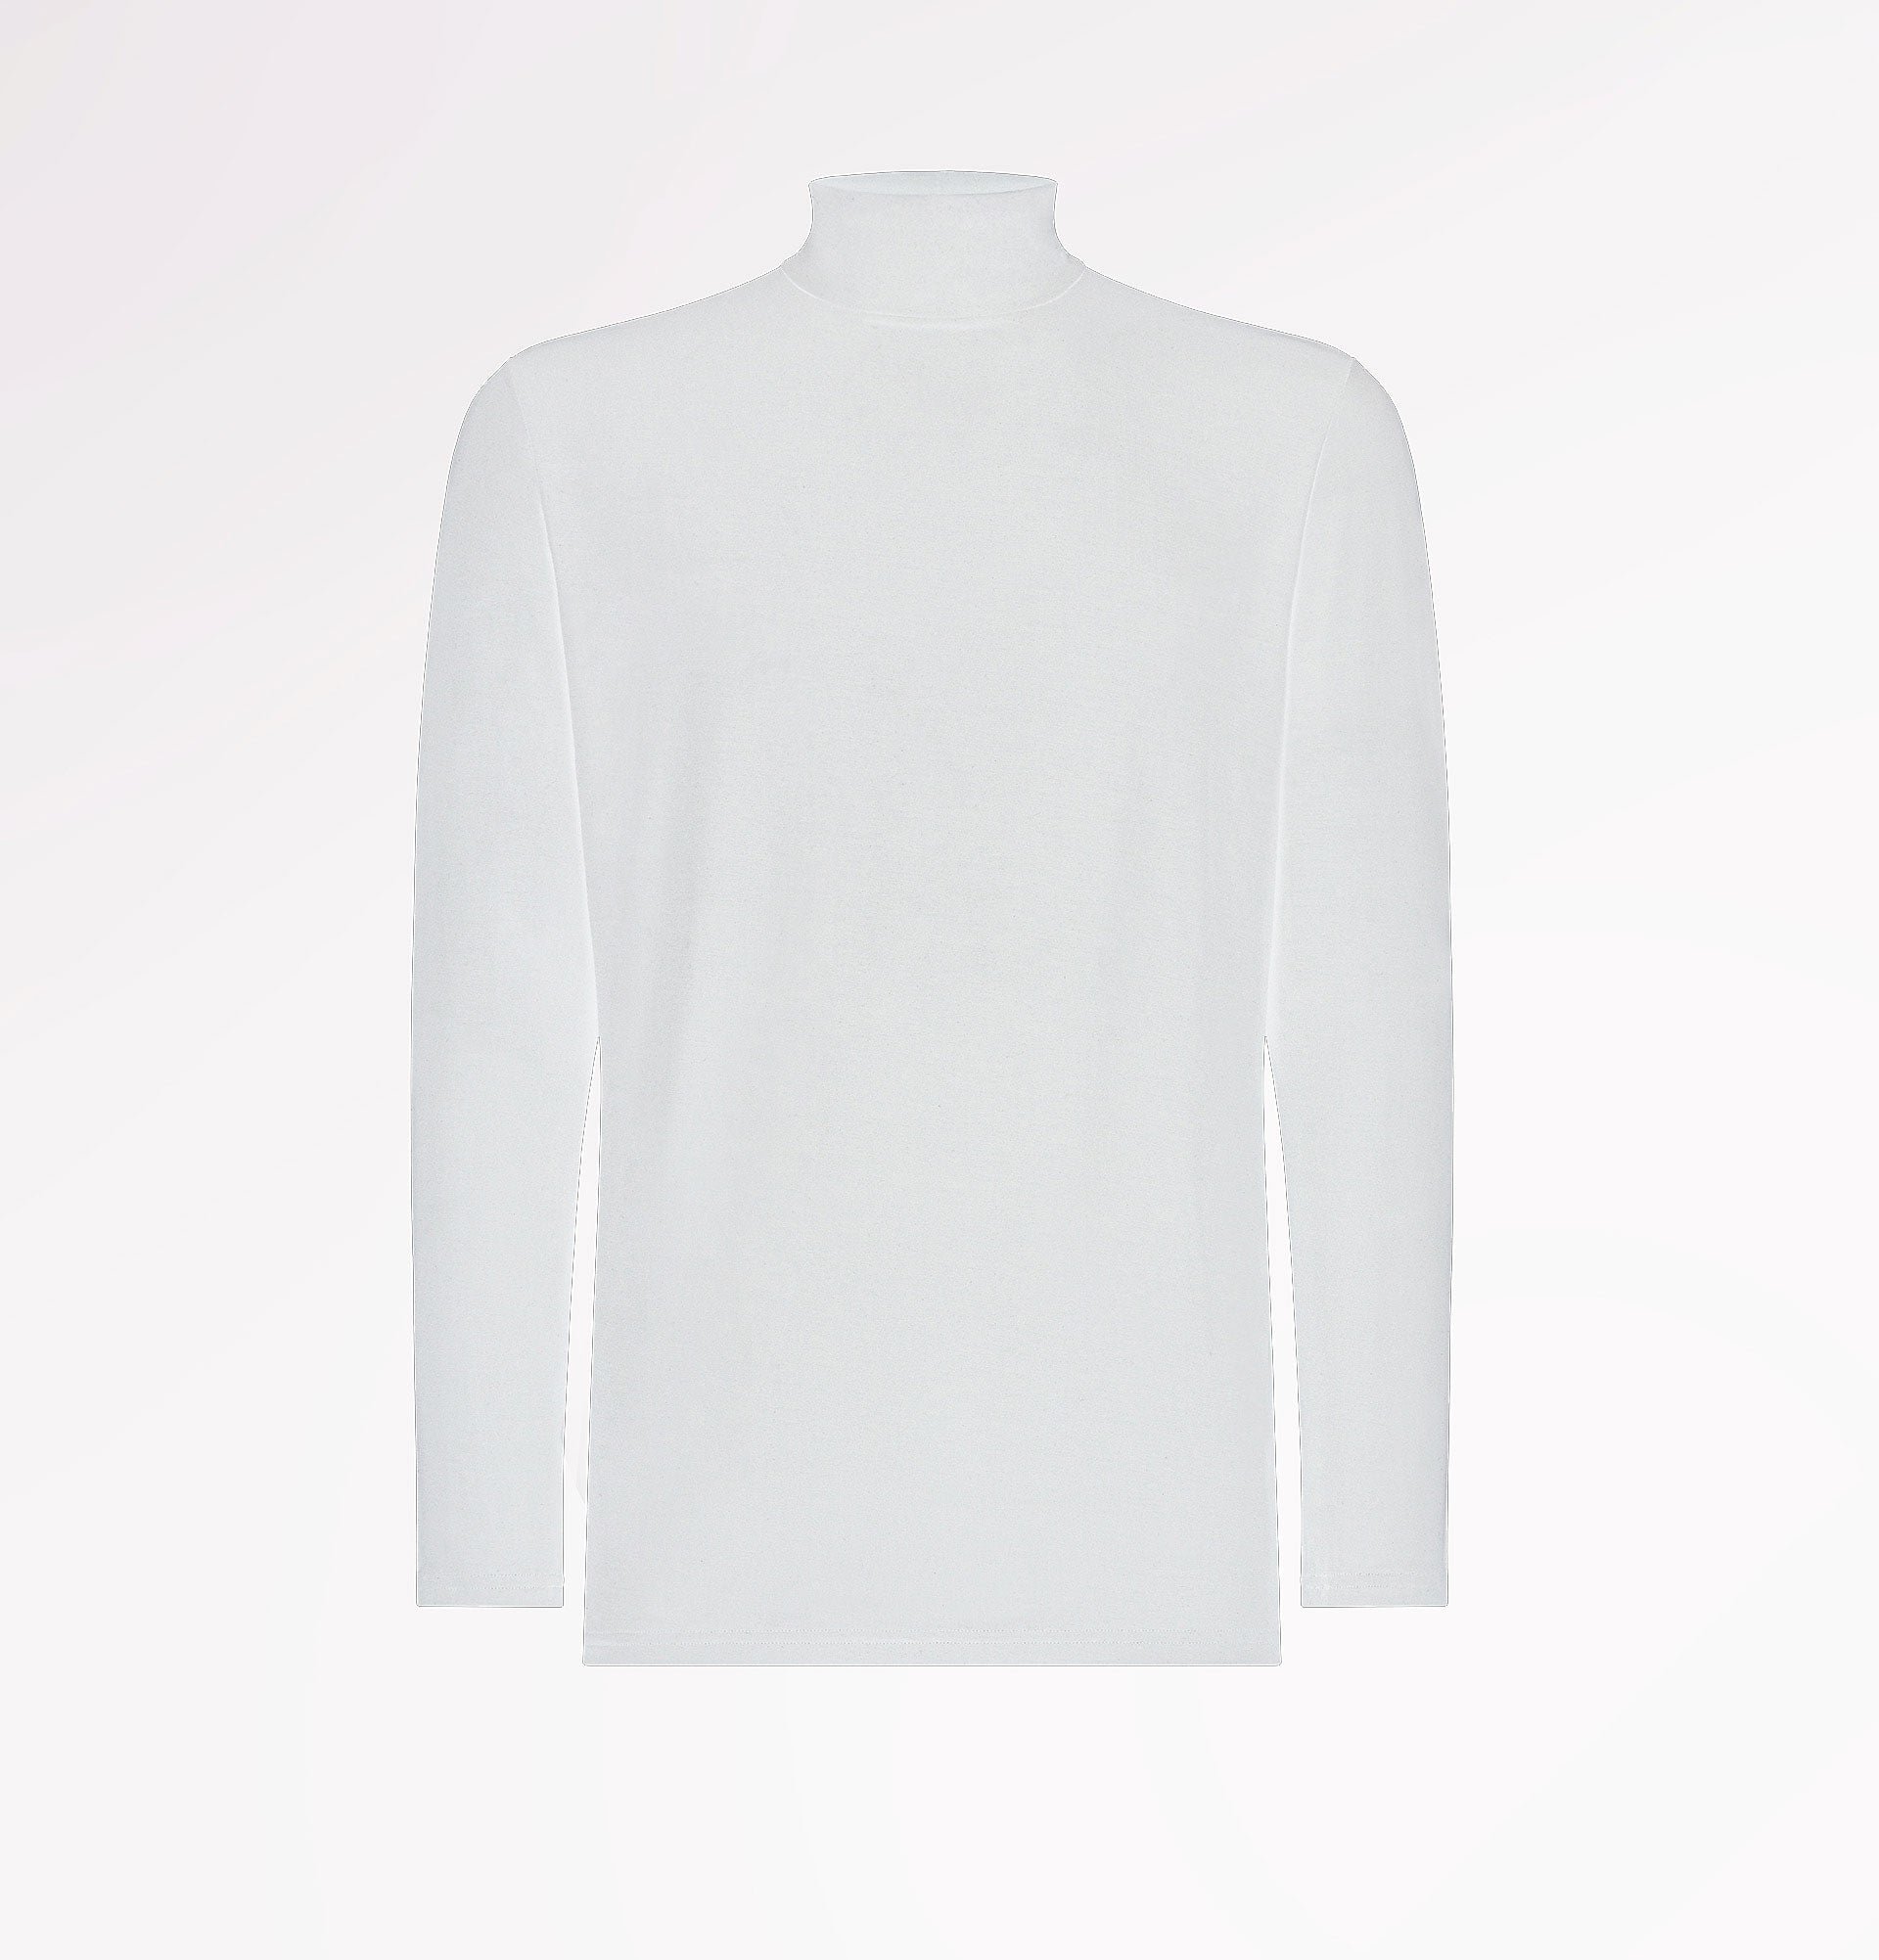 Men's TENCEL™ turtleneck sweater with long sleeves